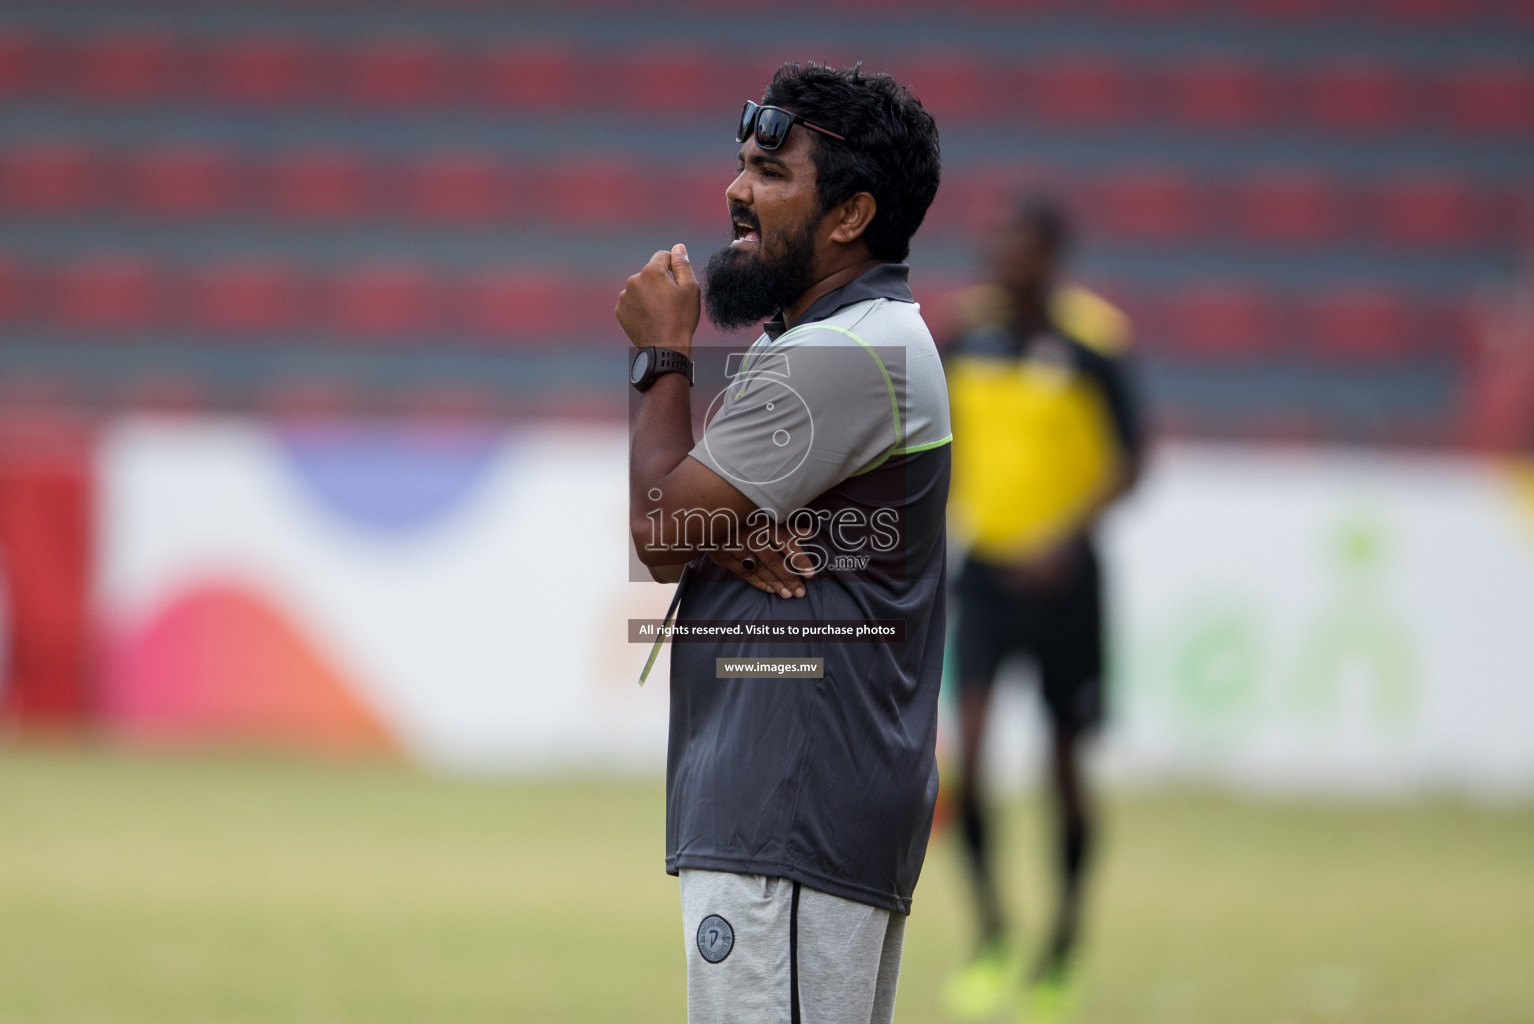 Jamaaluddin School vs Muhyiddin School in MAMEN Inter School Football Tournament 2019 (U13) in Male, Maldives on 30th March 2019, Photos: Hassan Simah / images.mv